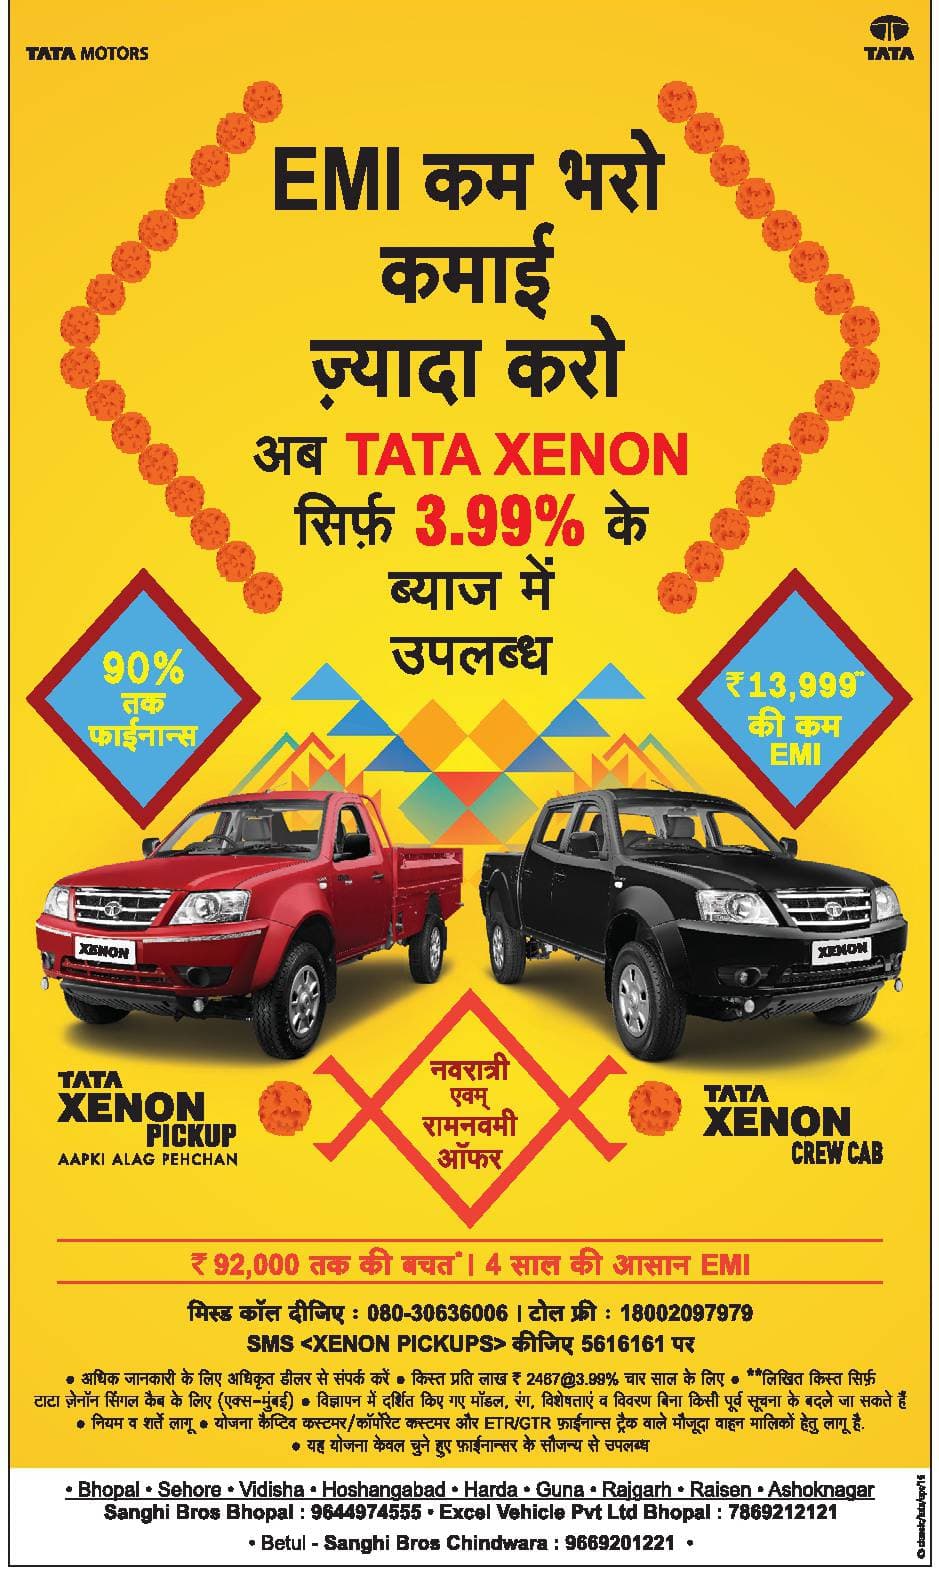 Tata Motors Xenon